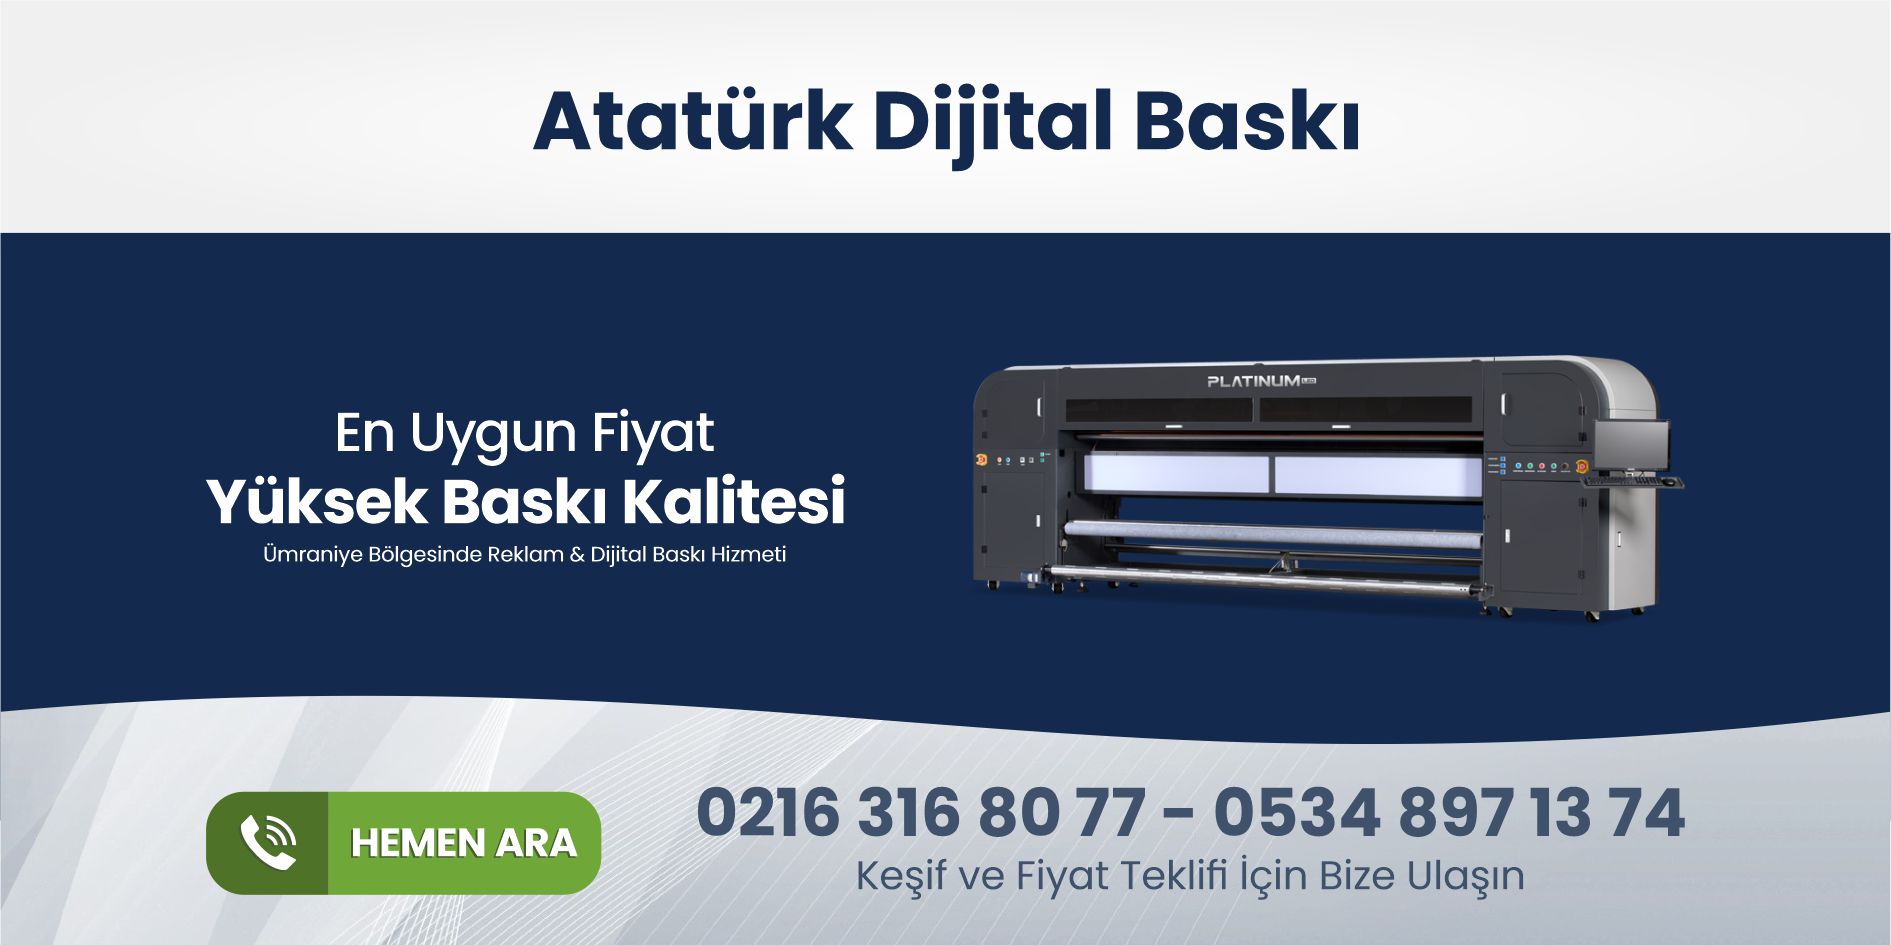 You are currently viewing Atatürk Dijital Baskı